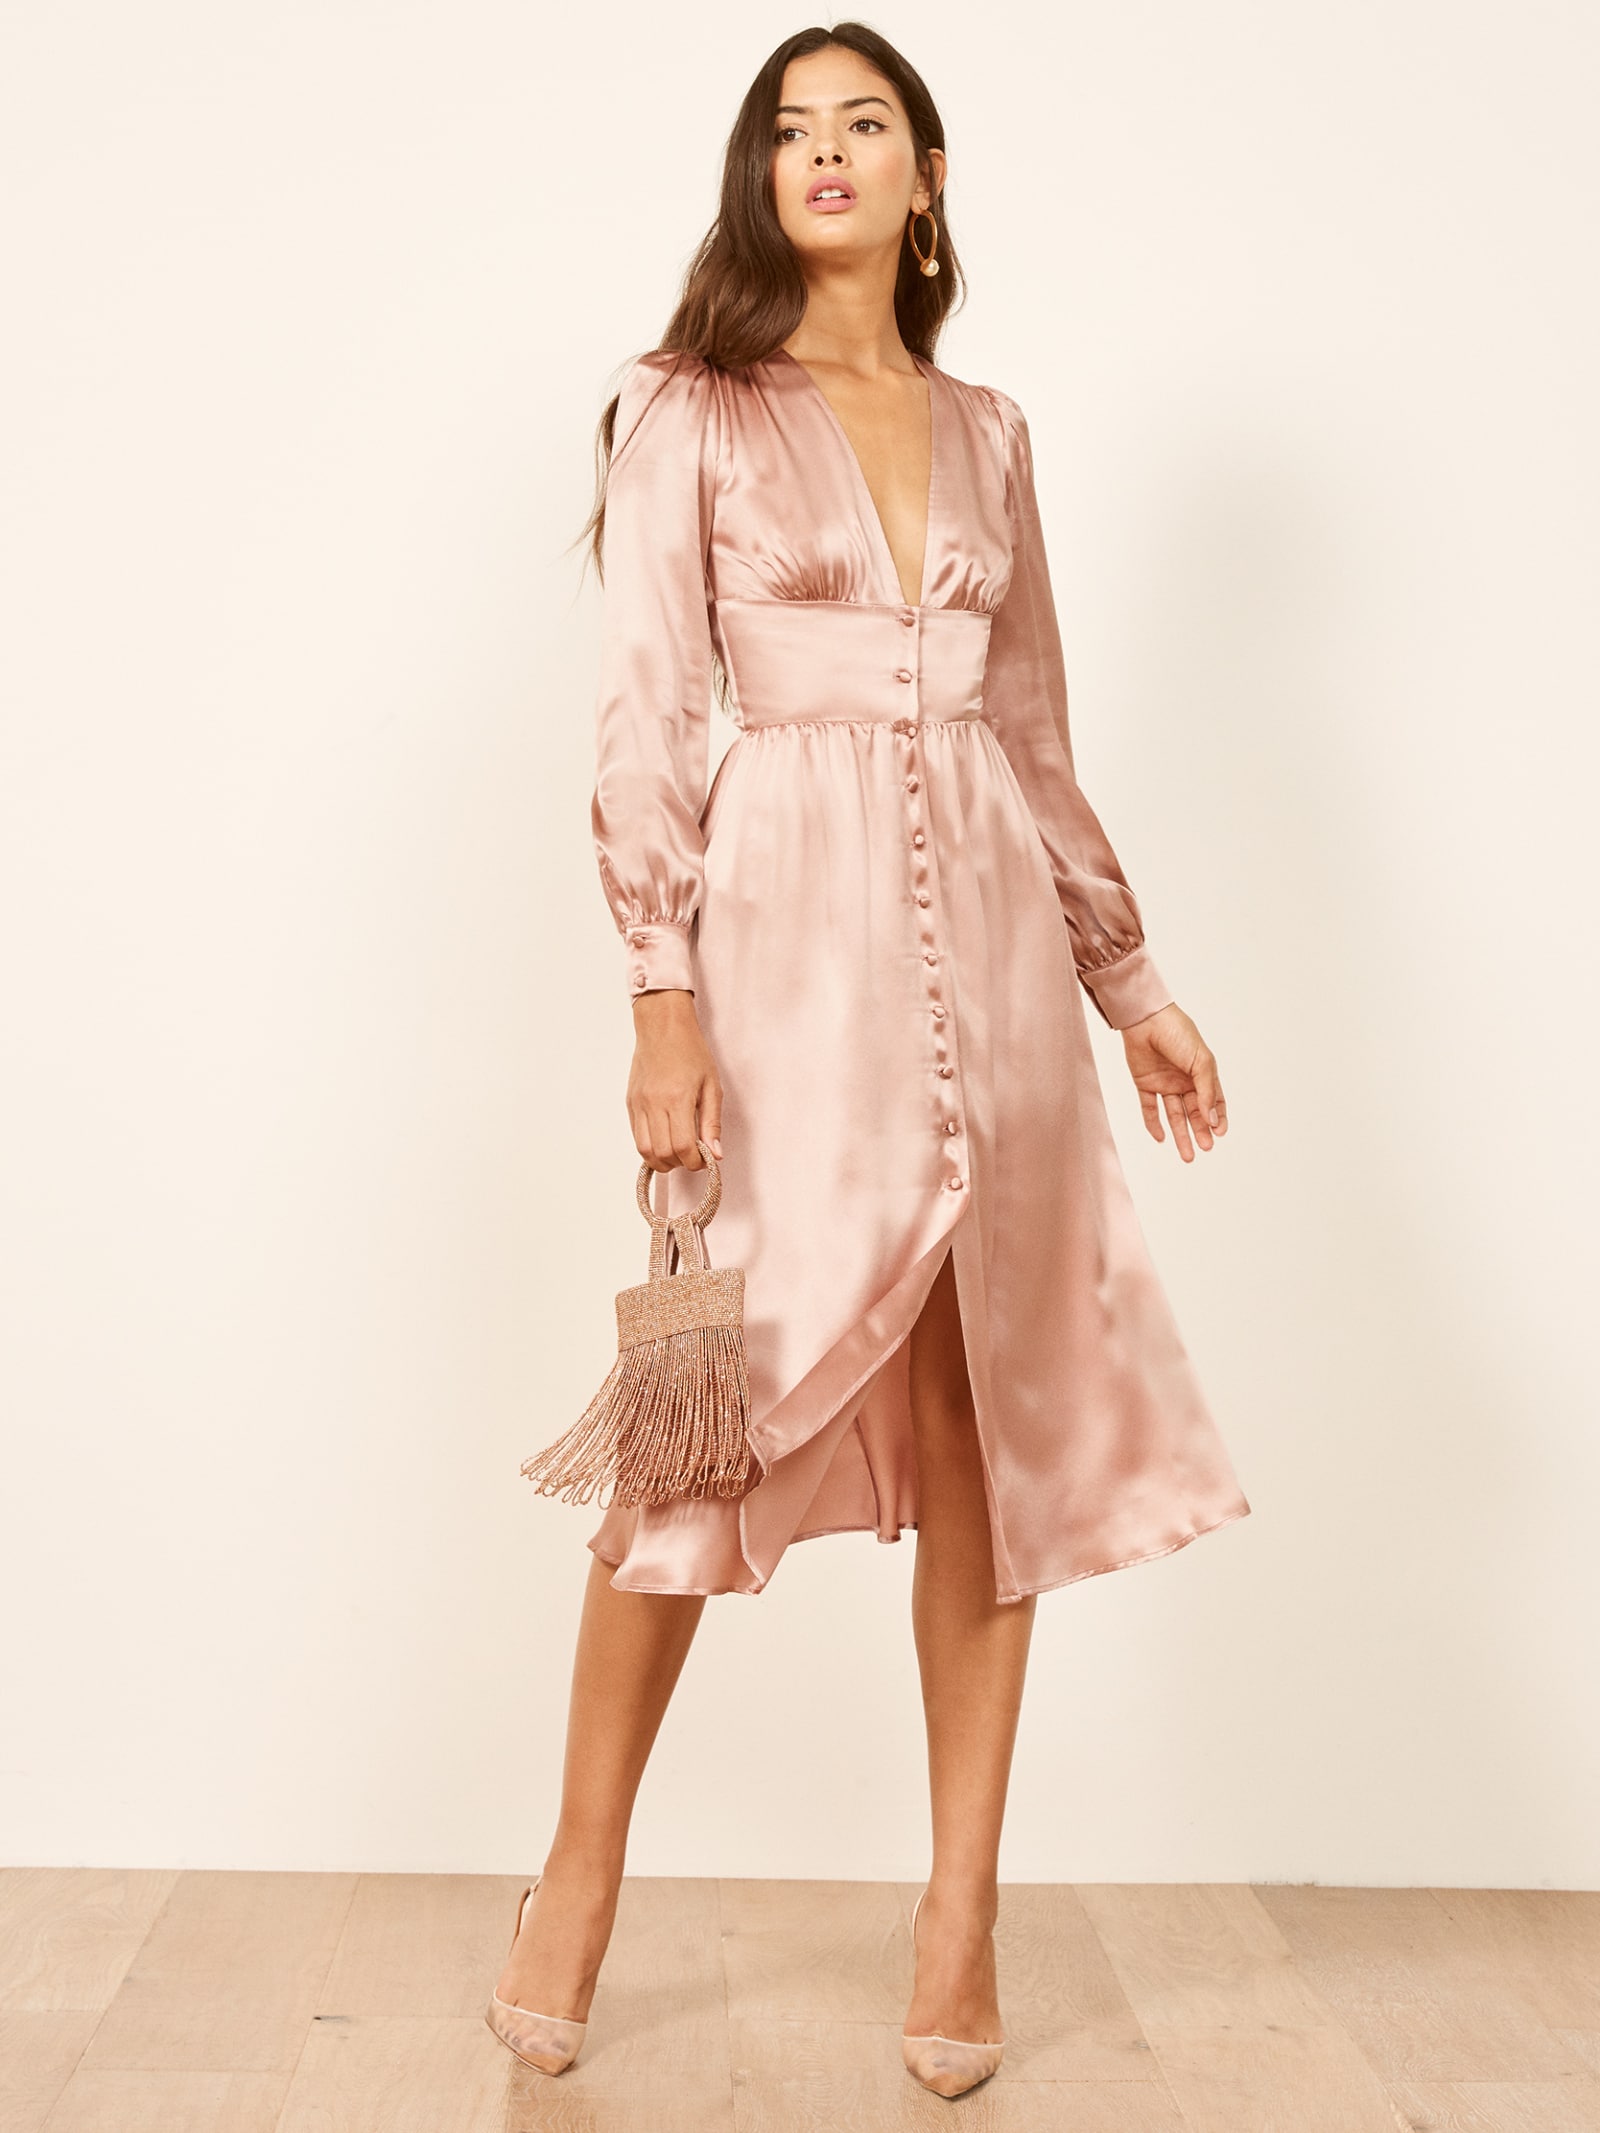 elegant gowns 2019